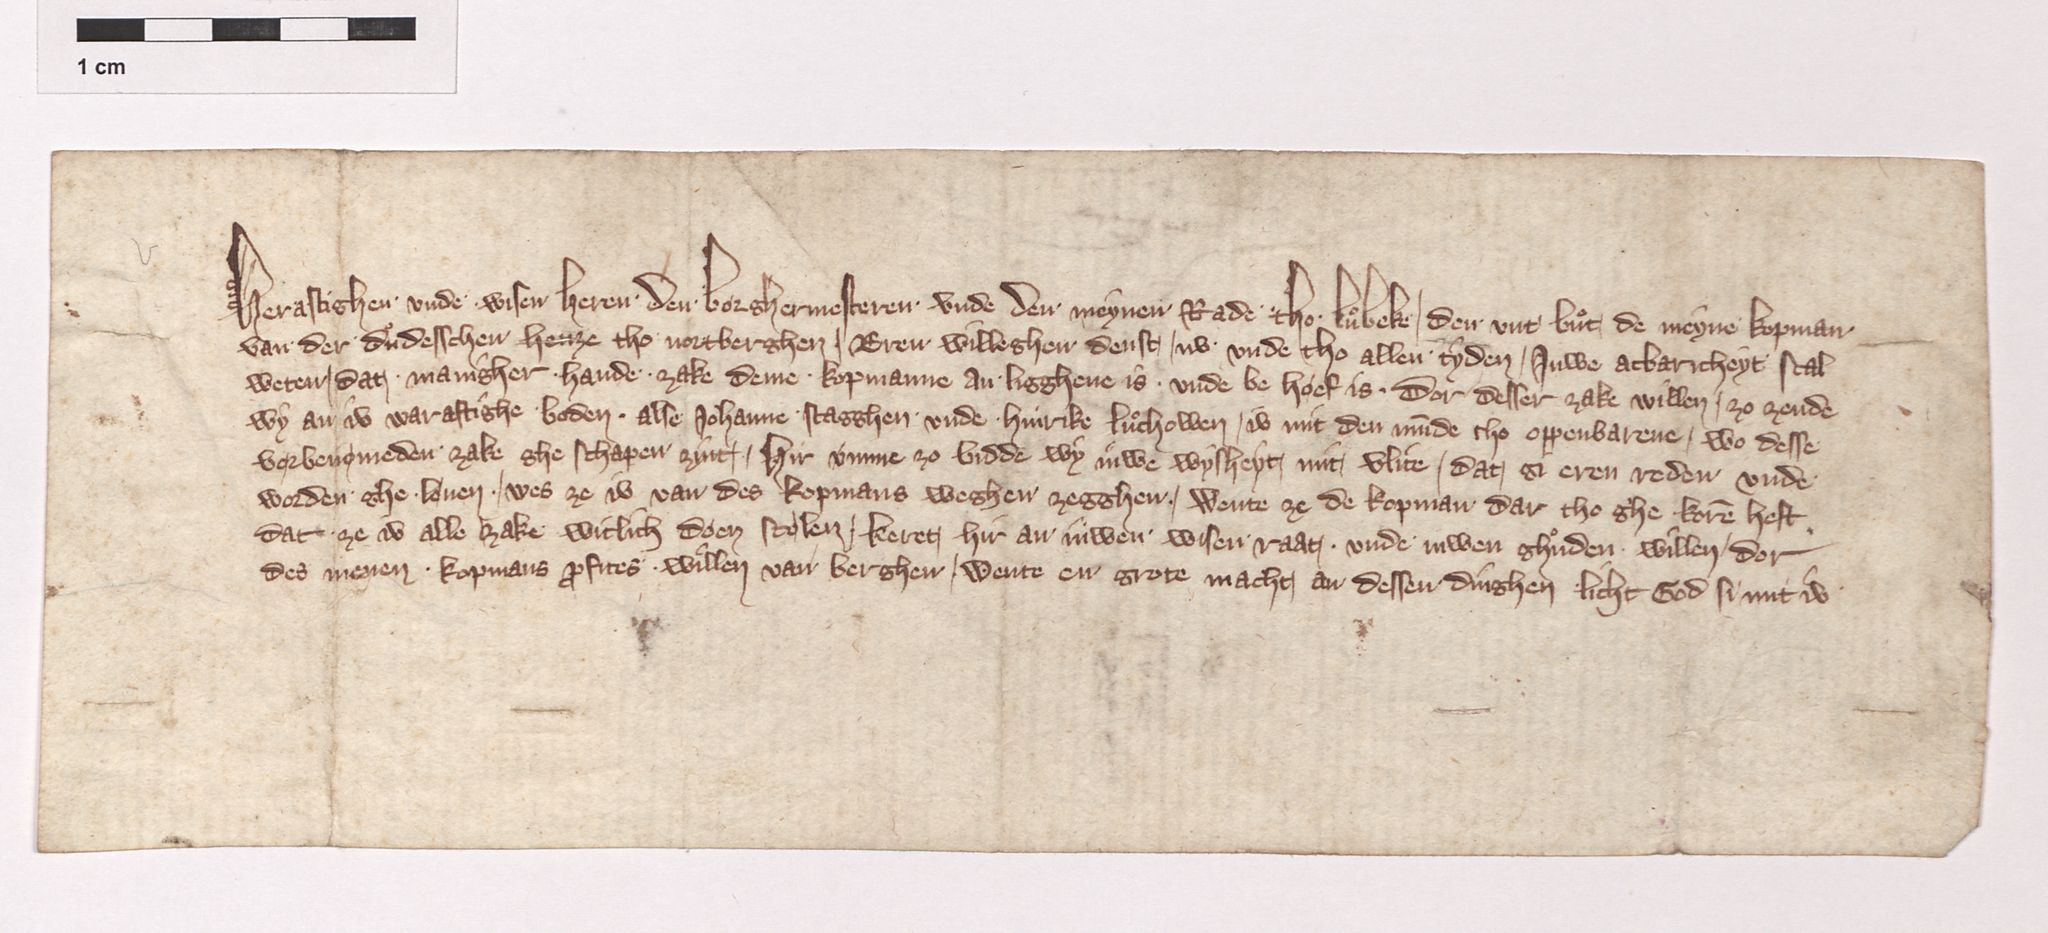 07.1 Urkunden, 3 Auswärtige Beziehungen (Externa), AHL/-/21: Norwegen (Norvagica); Kontor zu Bergen, 1247-1747, s. 473